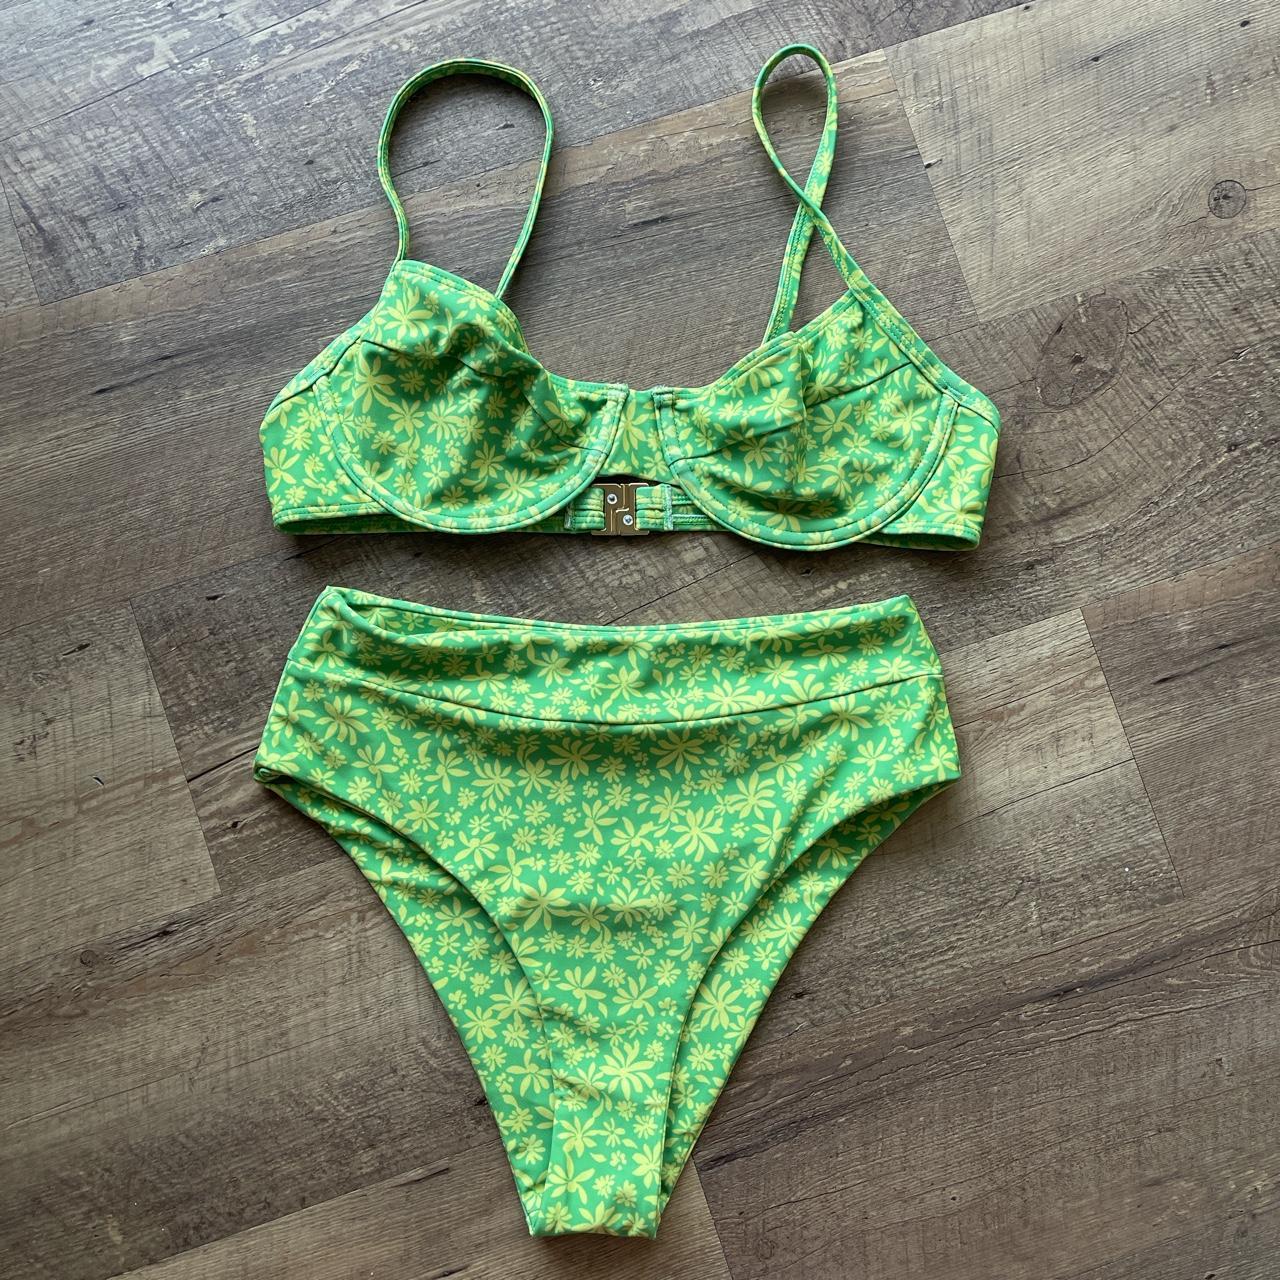 Kulani Kinis Women's Green and Yellow Bikinis-and-tankini-sets